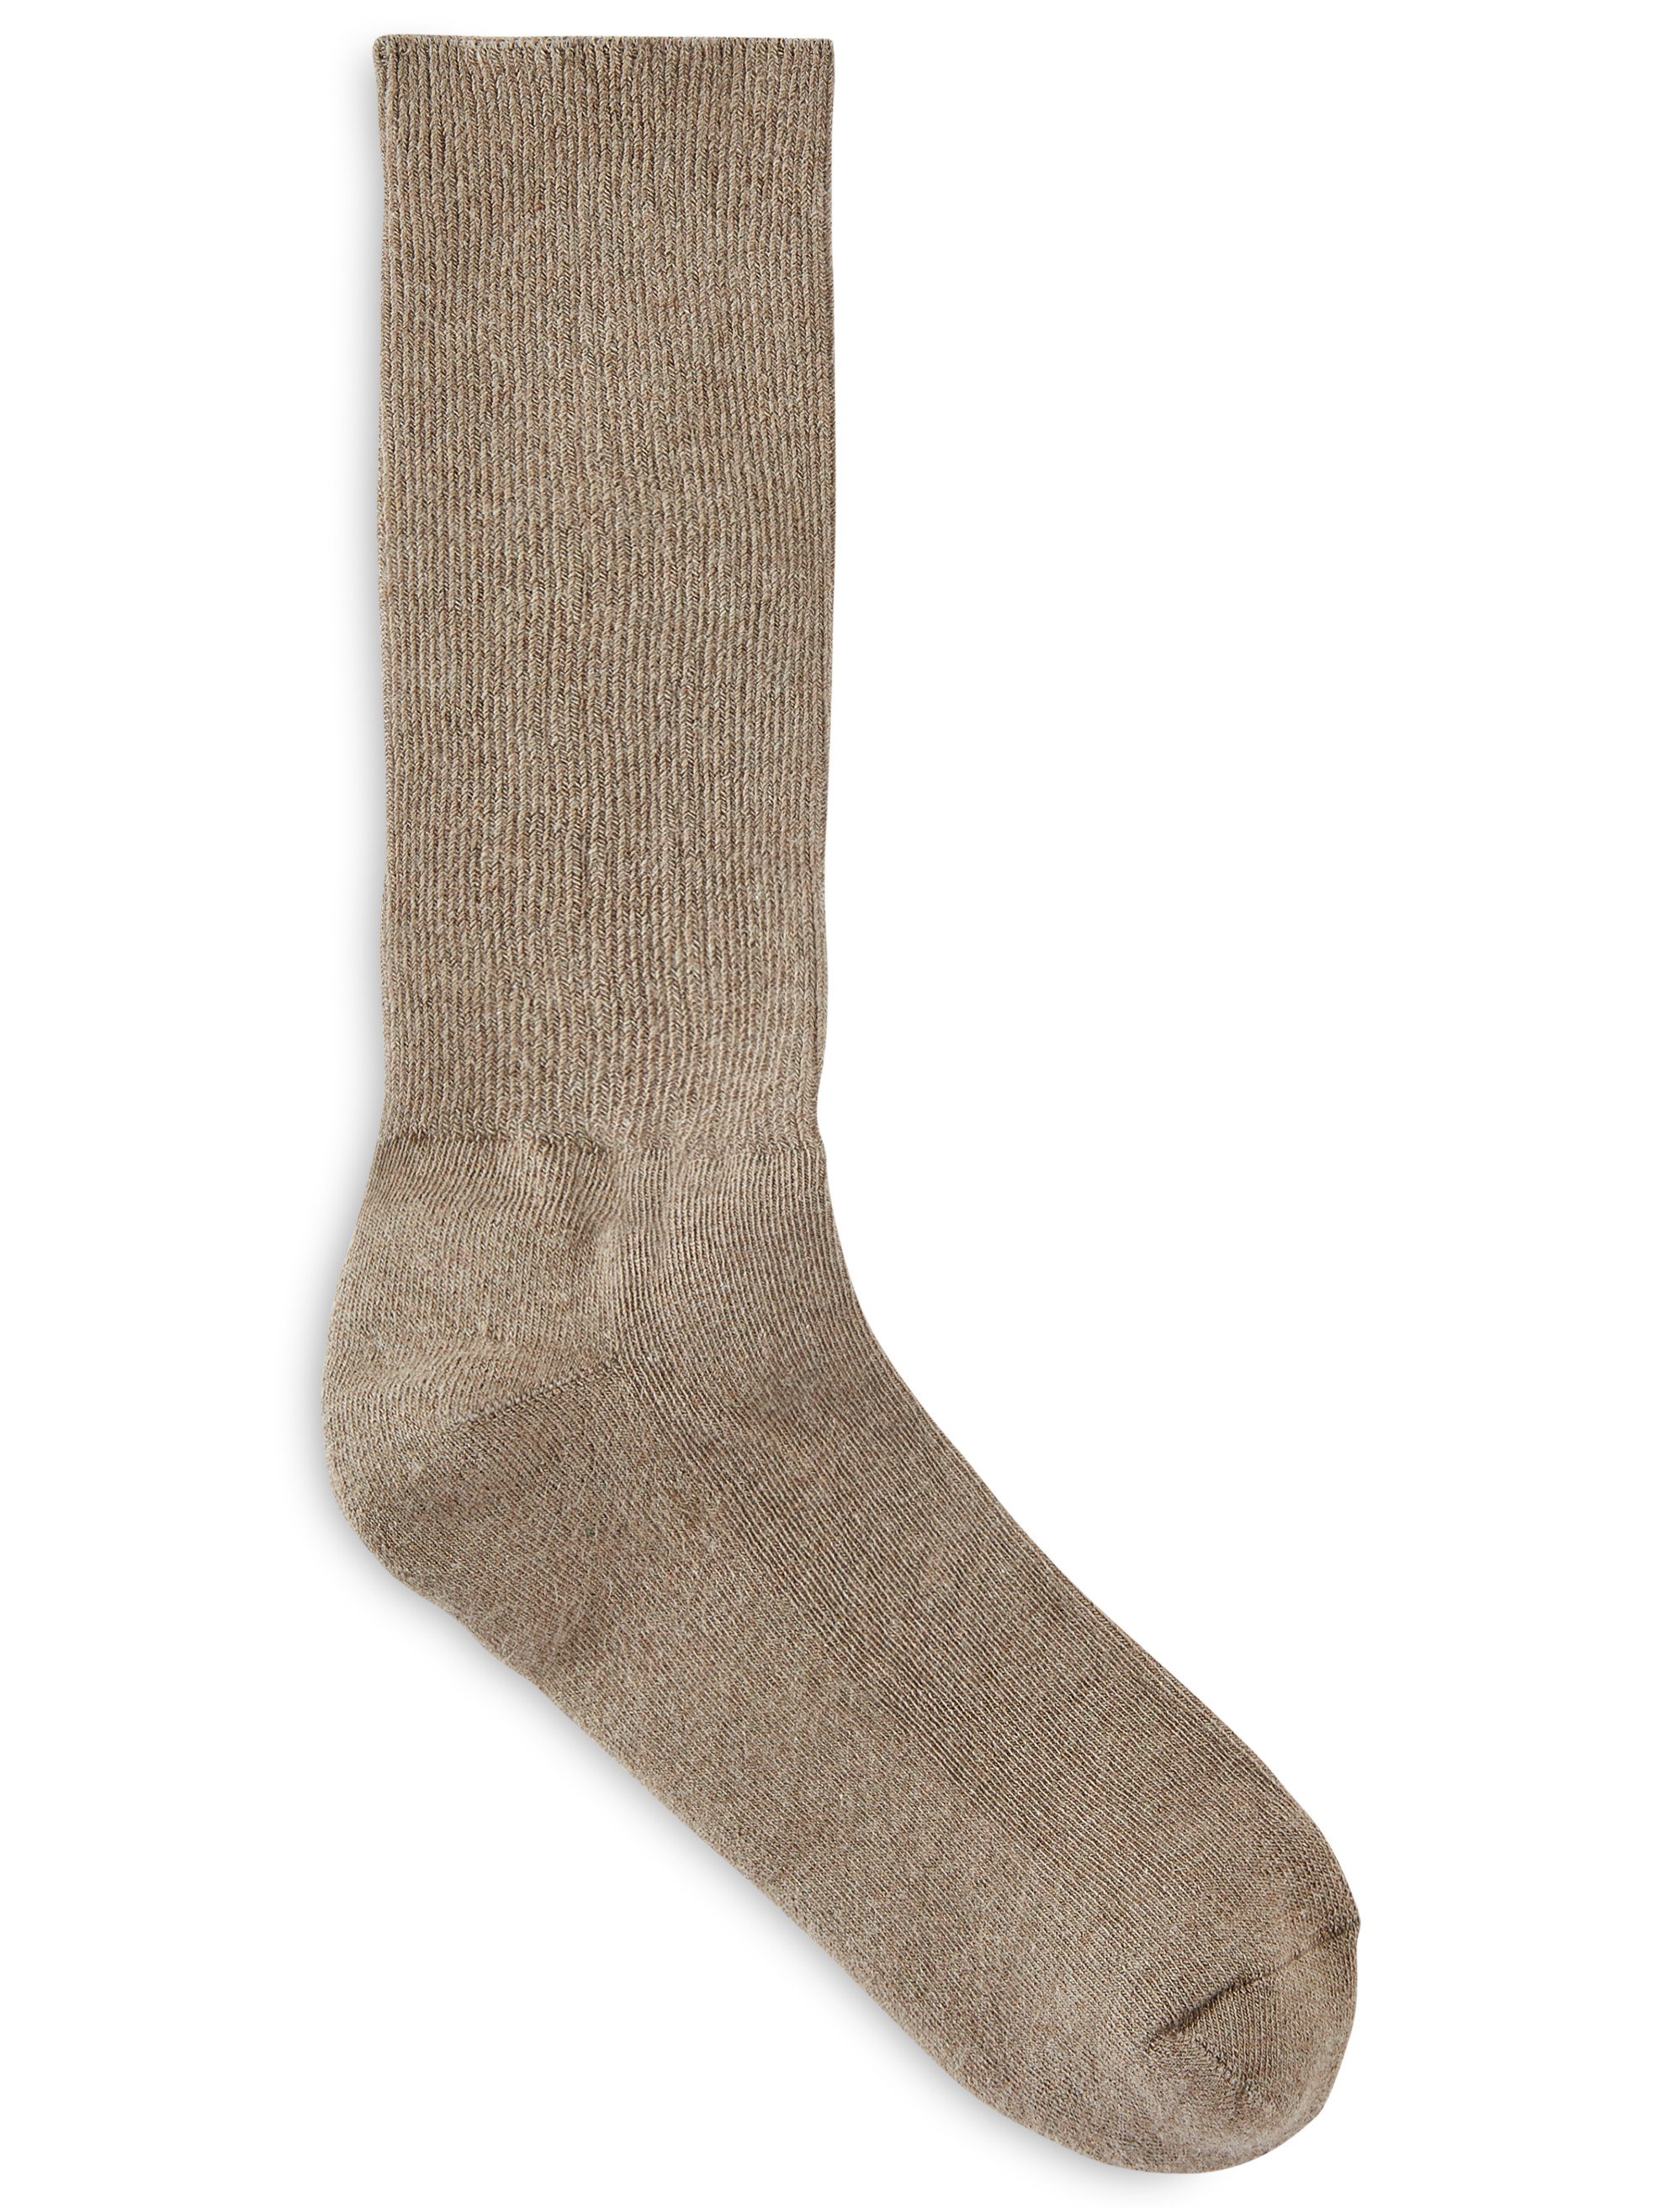 EuroChoice Comfort Stretch Socks Casual Male XL Big & Tall | eBay